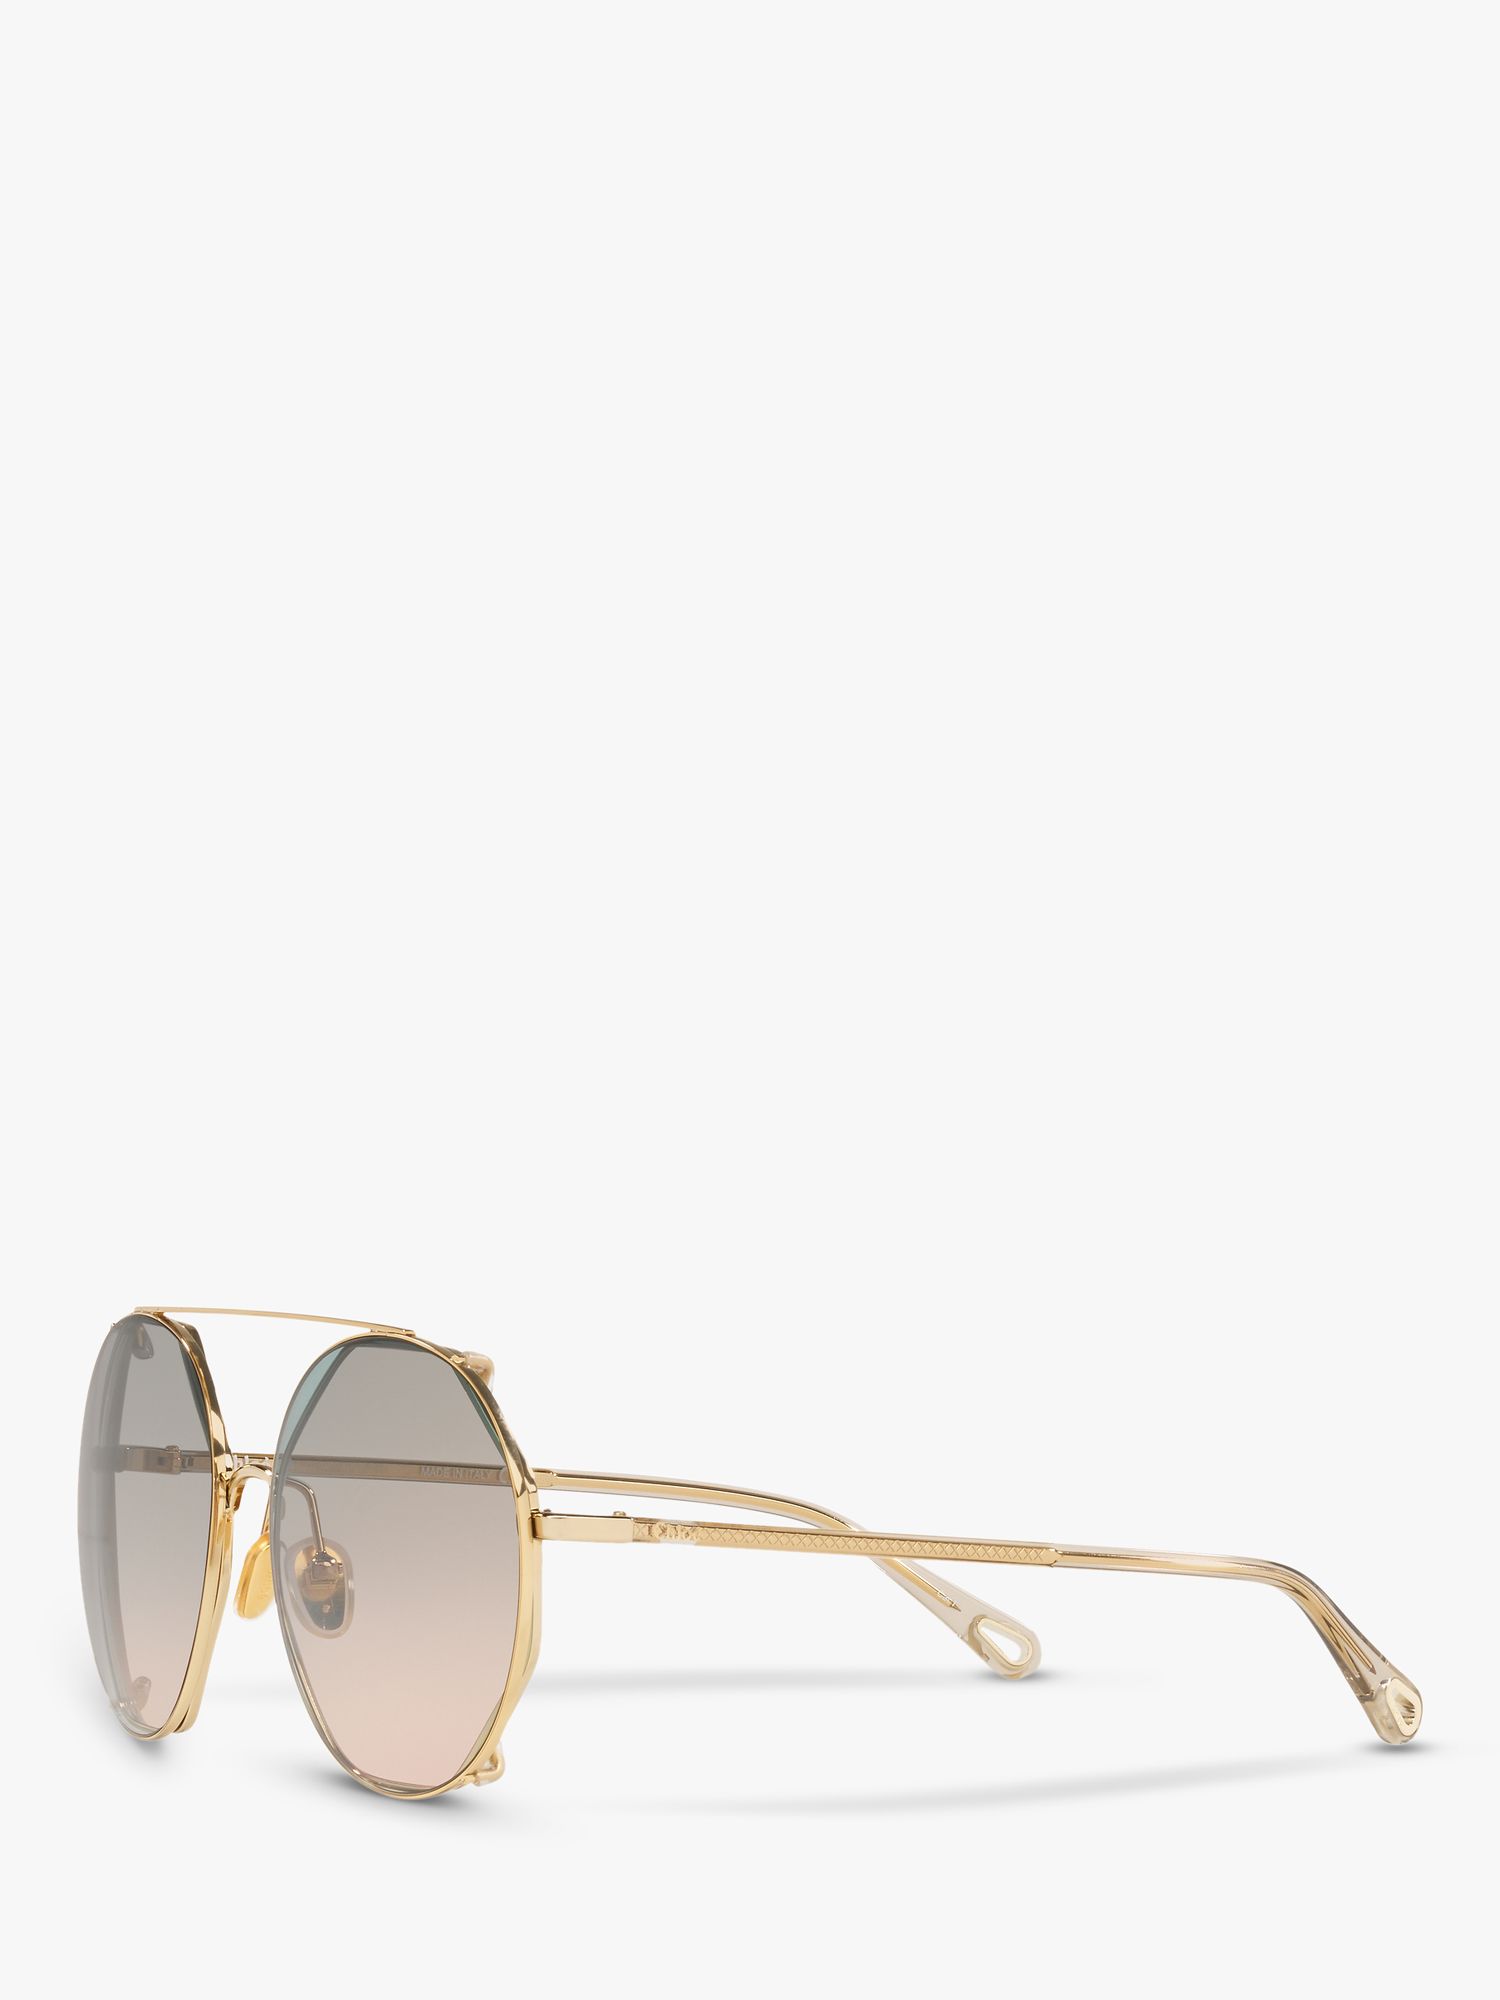 Chloé CH0041S Women's Round Sunglasses, Gold/Green Gradient